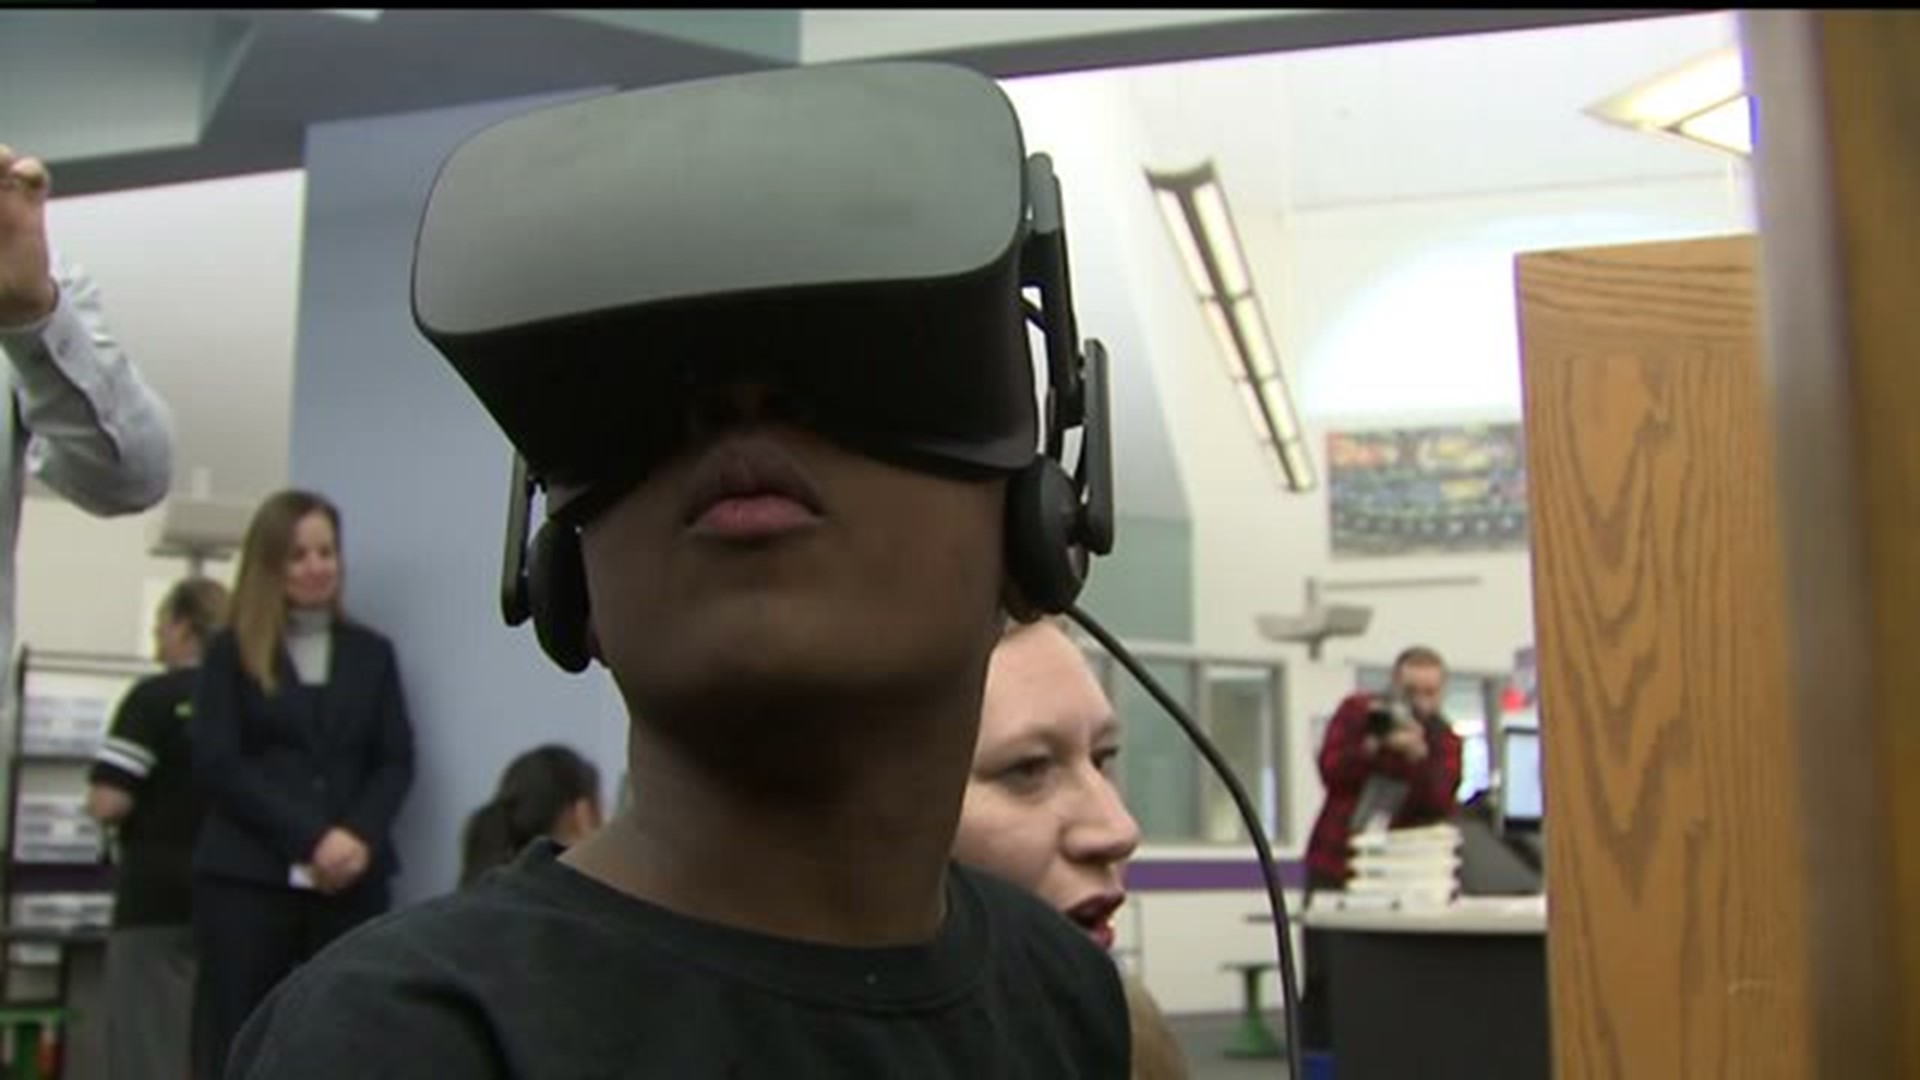 Buffalo Elementary School gets VR headsets